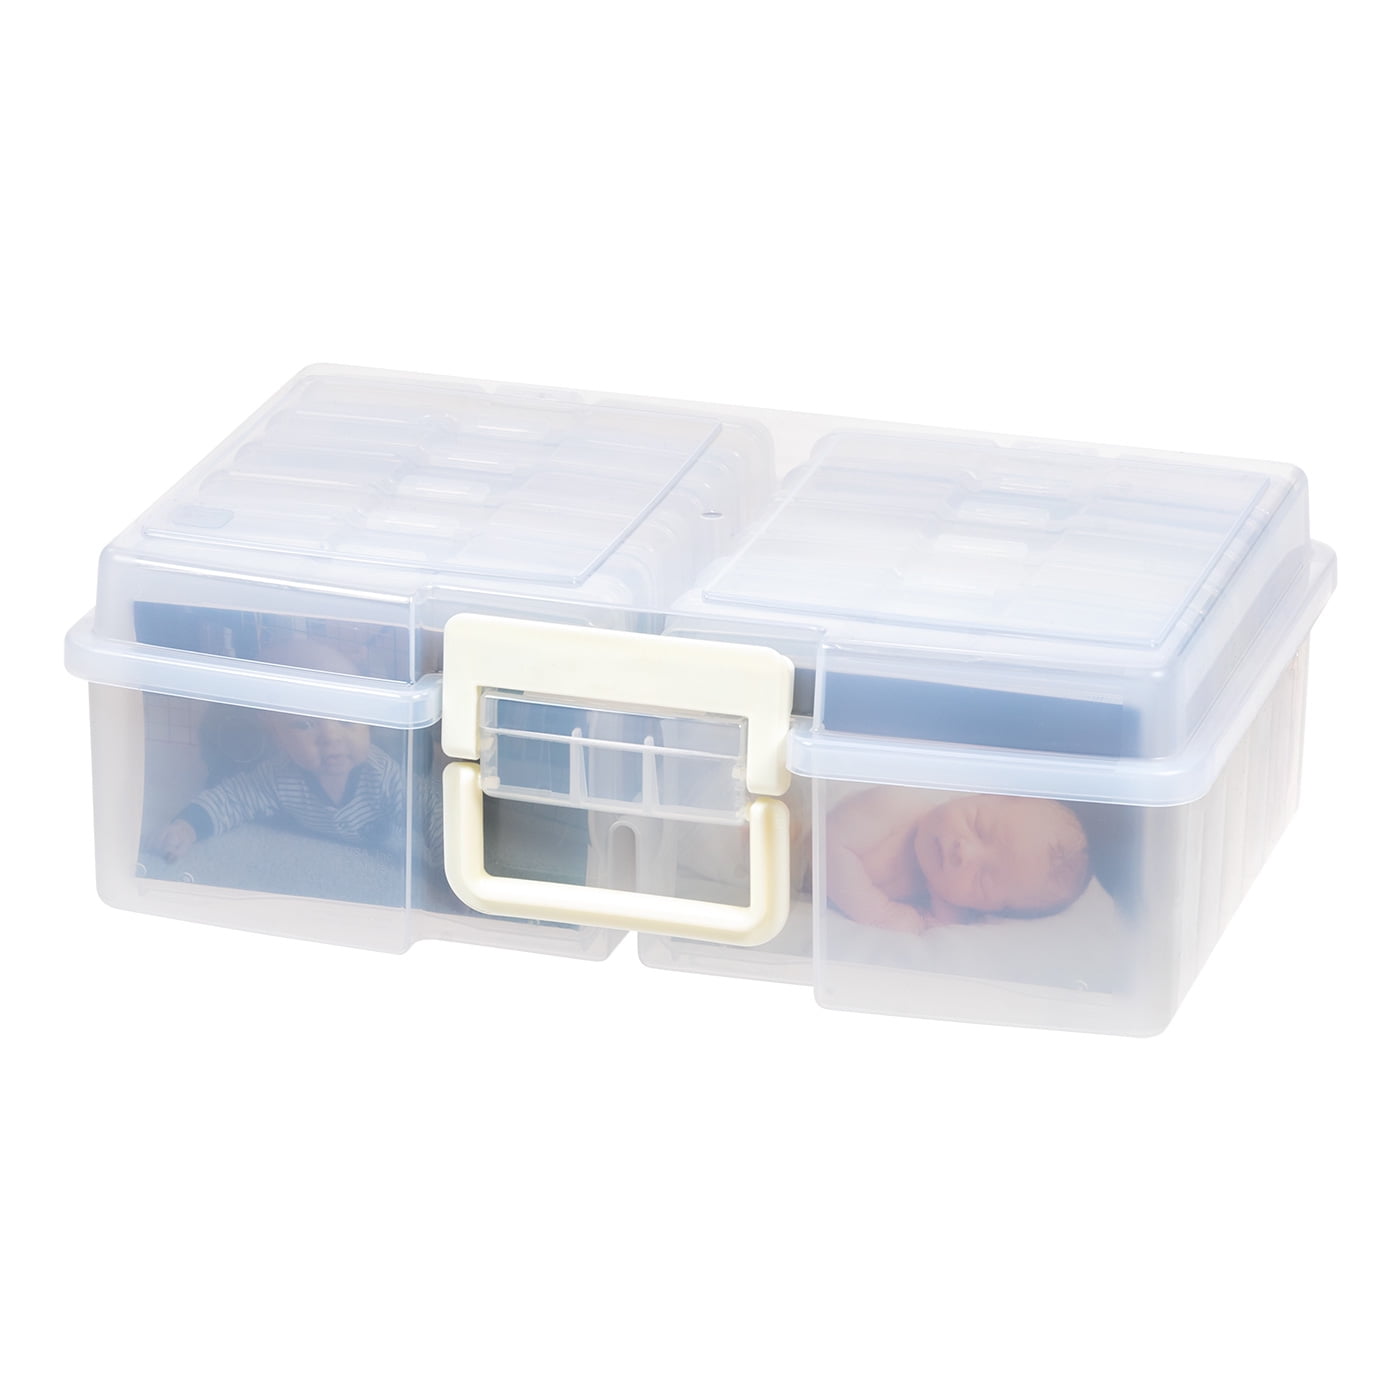 Semi Satchel Photo Photo & Craft Organizer Set New Version Plastic Storage Cases Inside Large Box with 8 Clear 